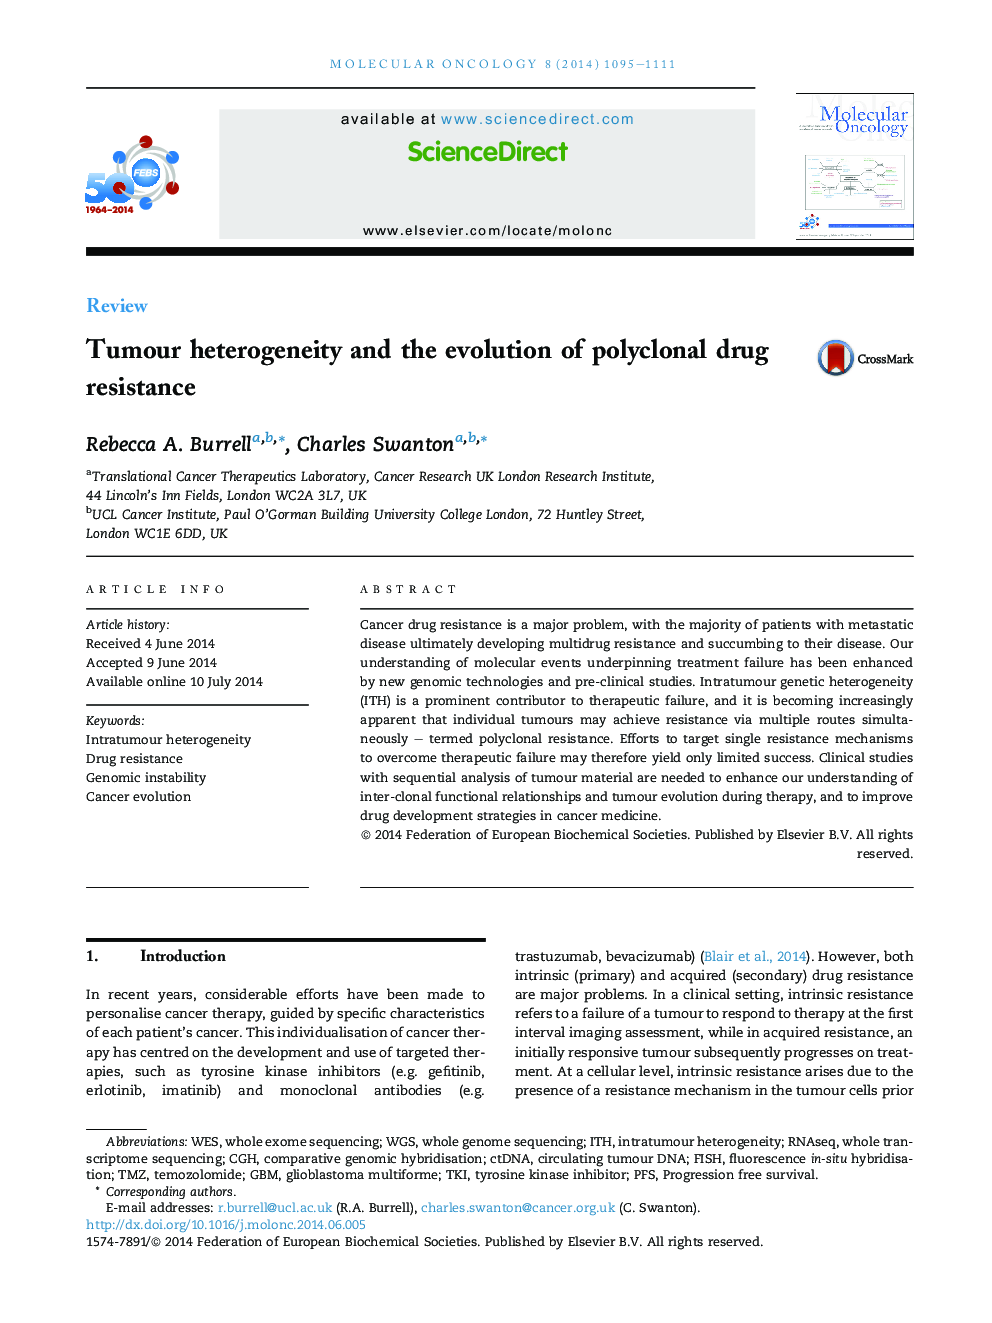 Tumour heterogeneity and the evolution of polyclonal drug resistance